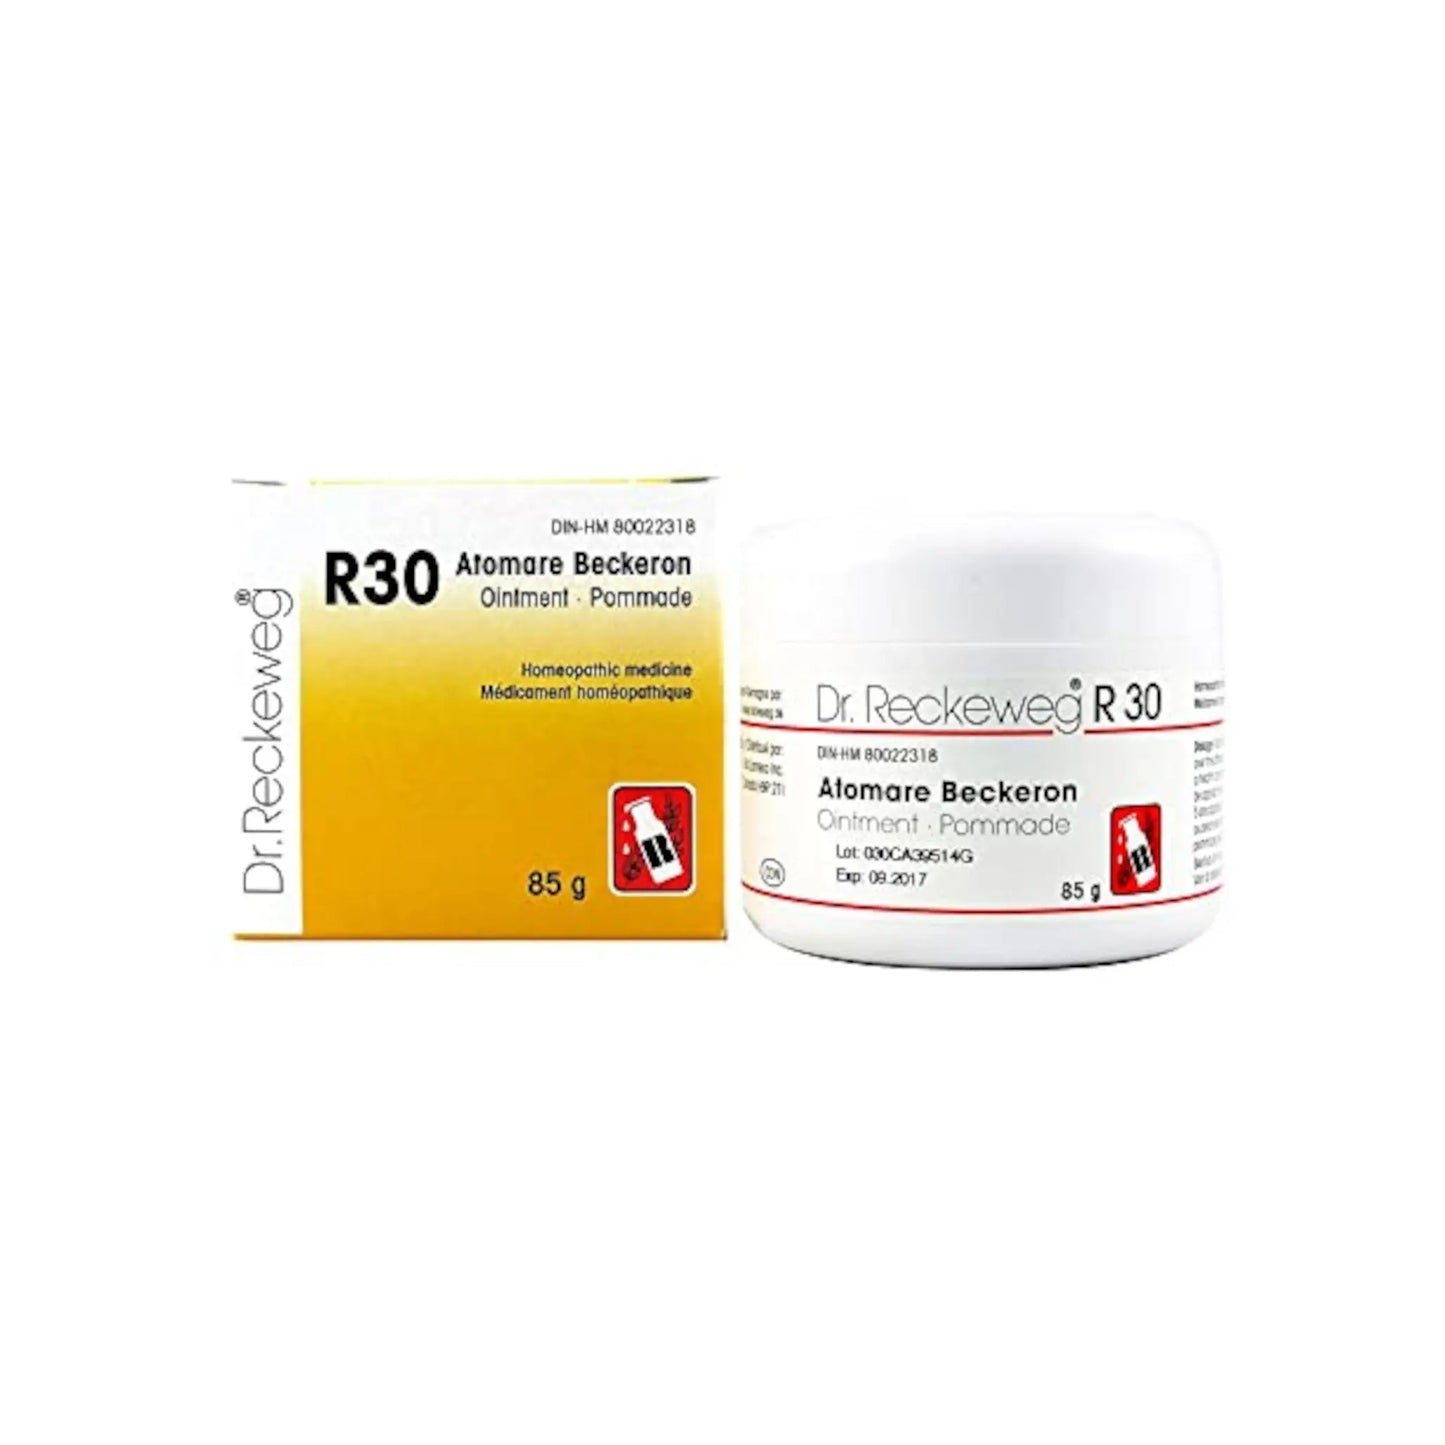 Dr. Reckeweg R30 - Atomare Beckeron Universal Ointment 85 g - my-ayurvedic